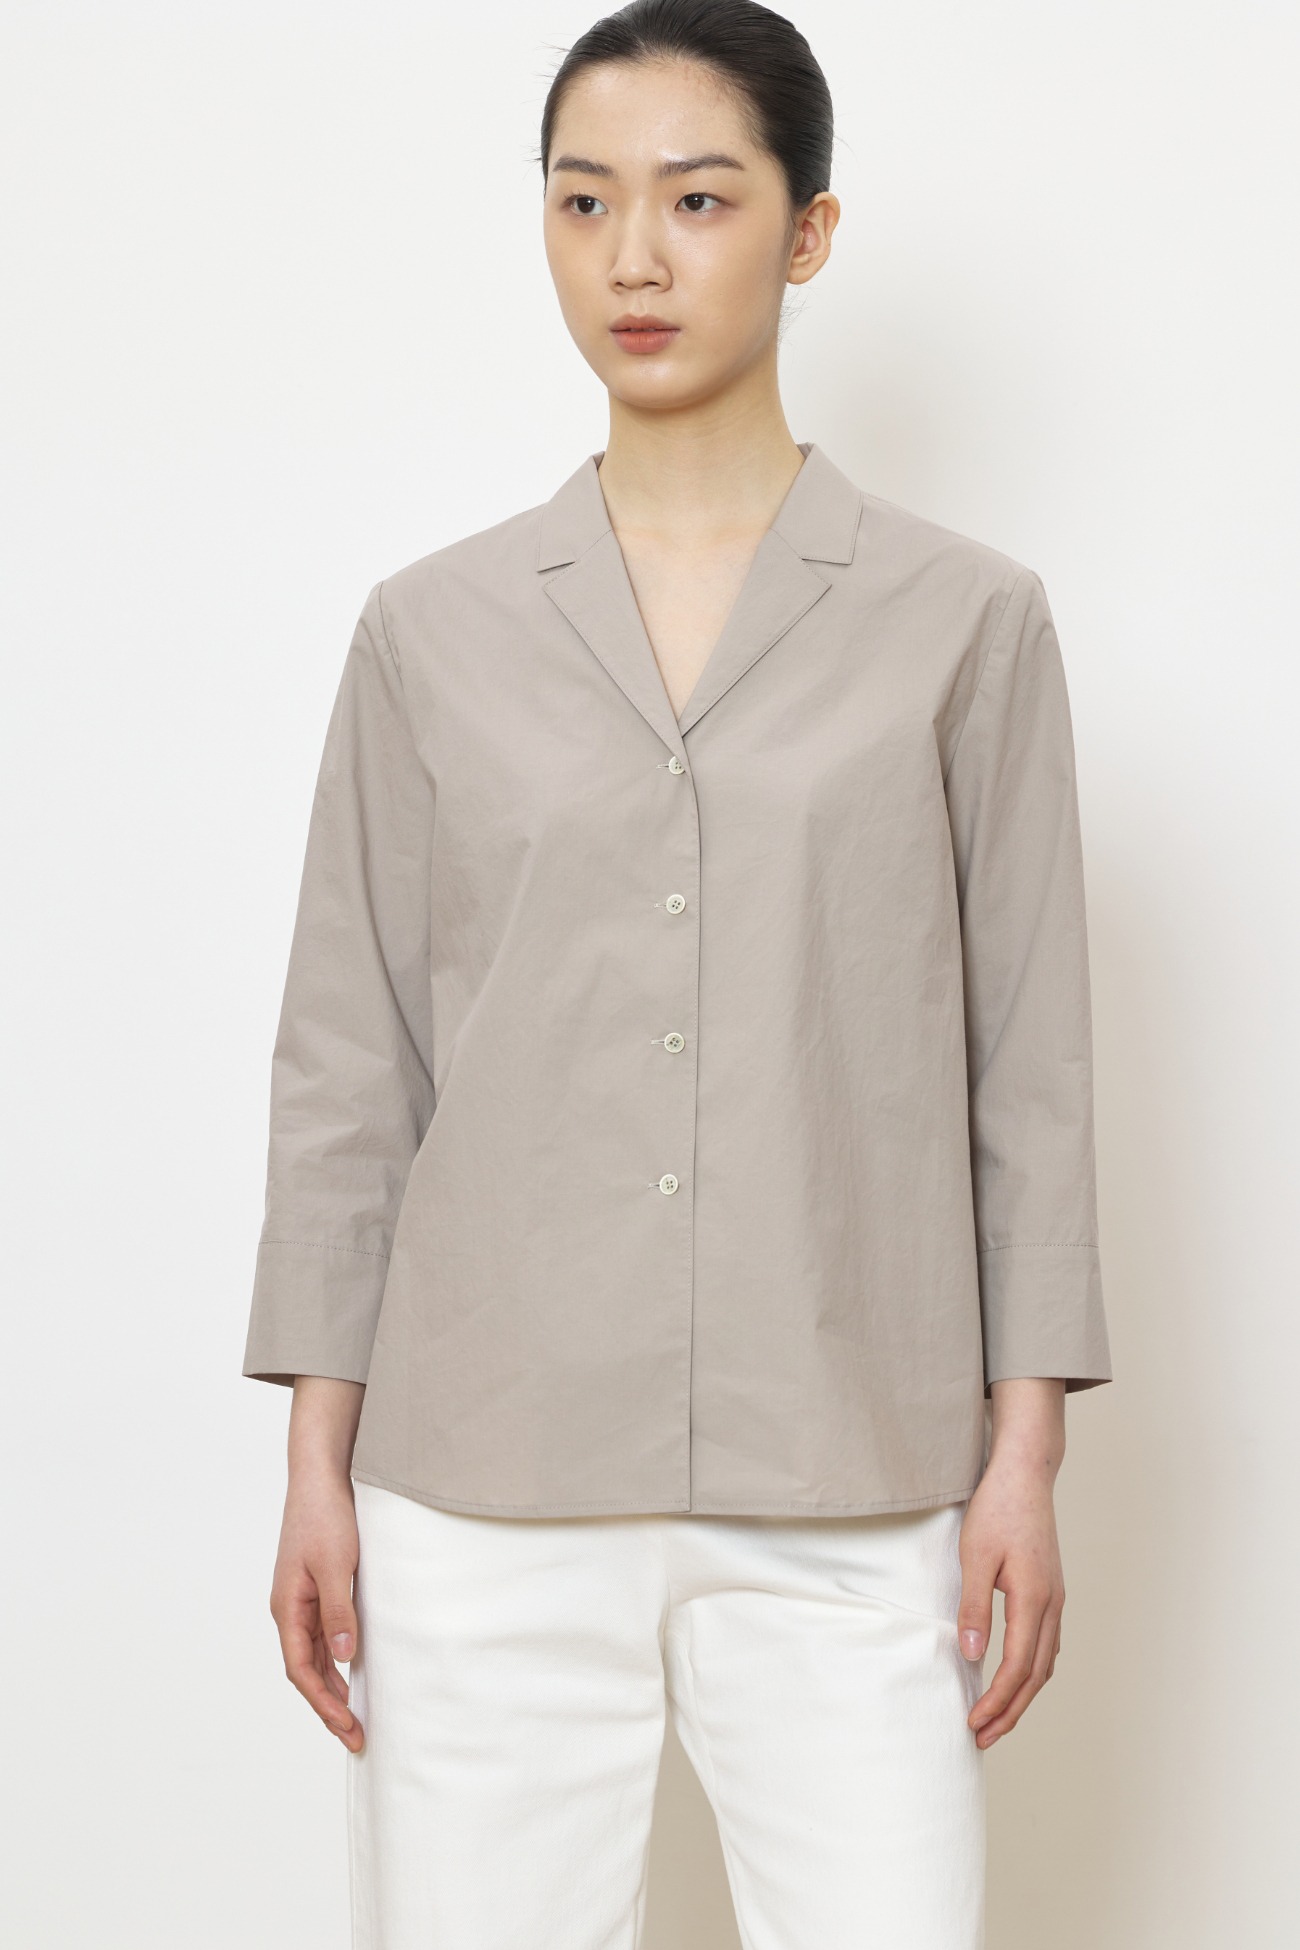  [ver.2023 Spring New] New soft tailored shirt light beige